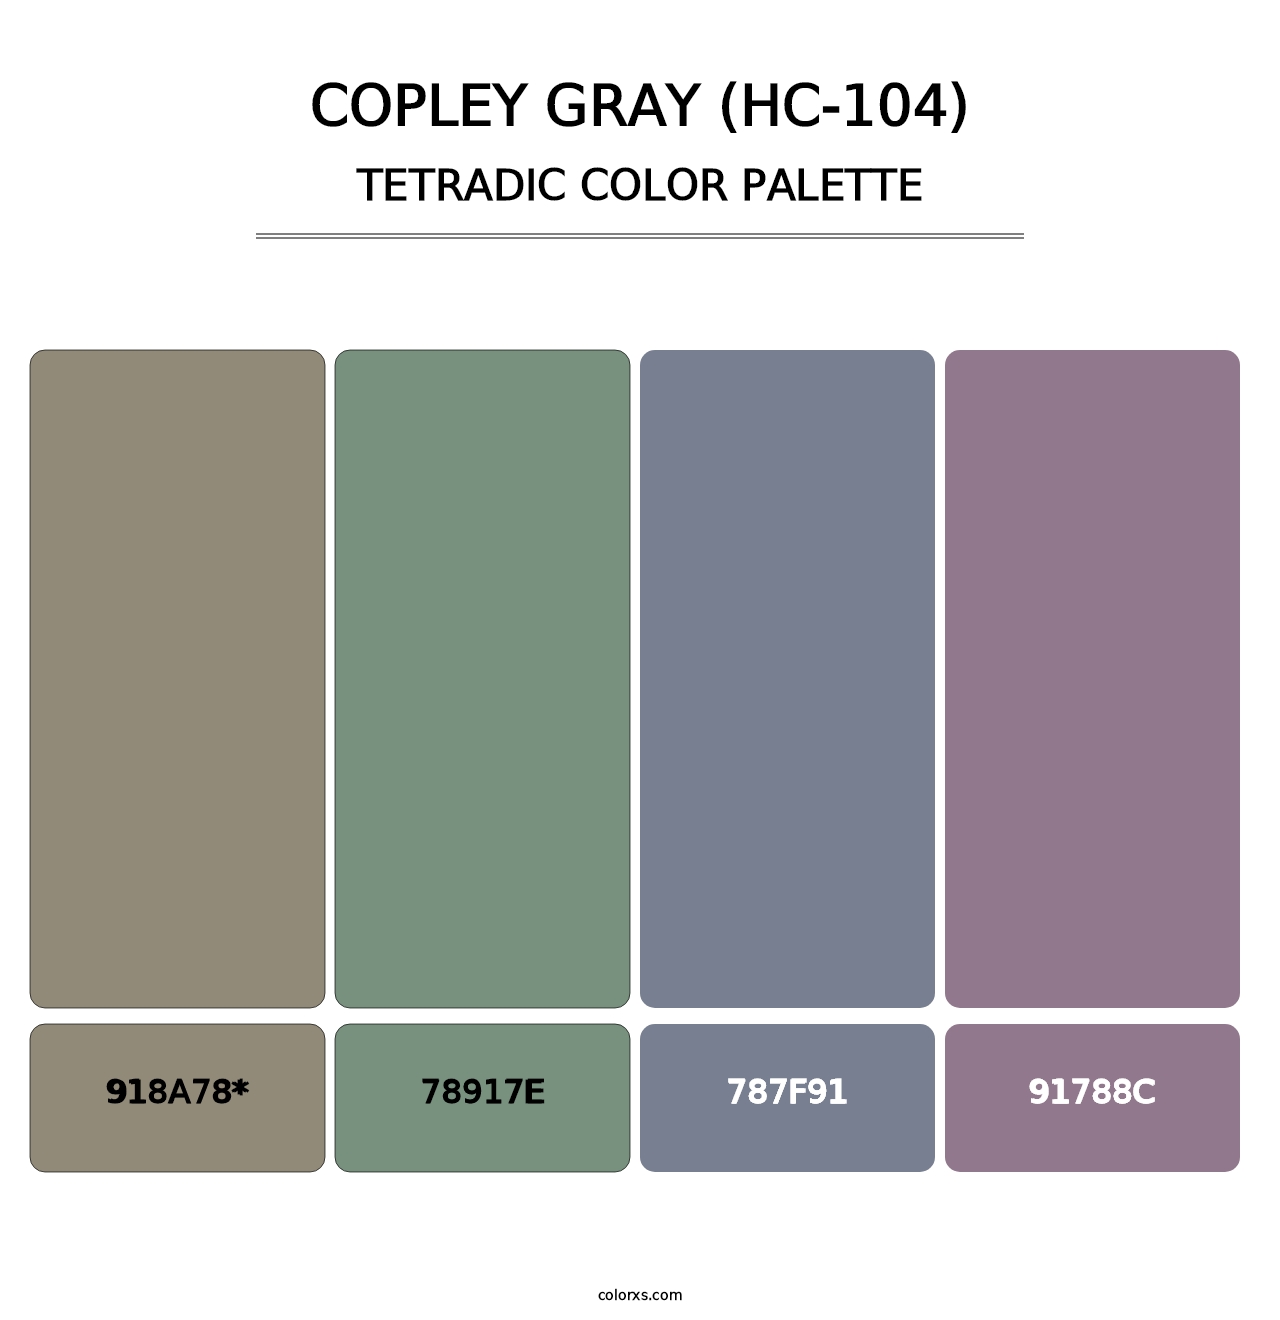 Copley Gray (HC-104) - Tetradic Color Palette